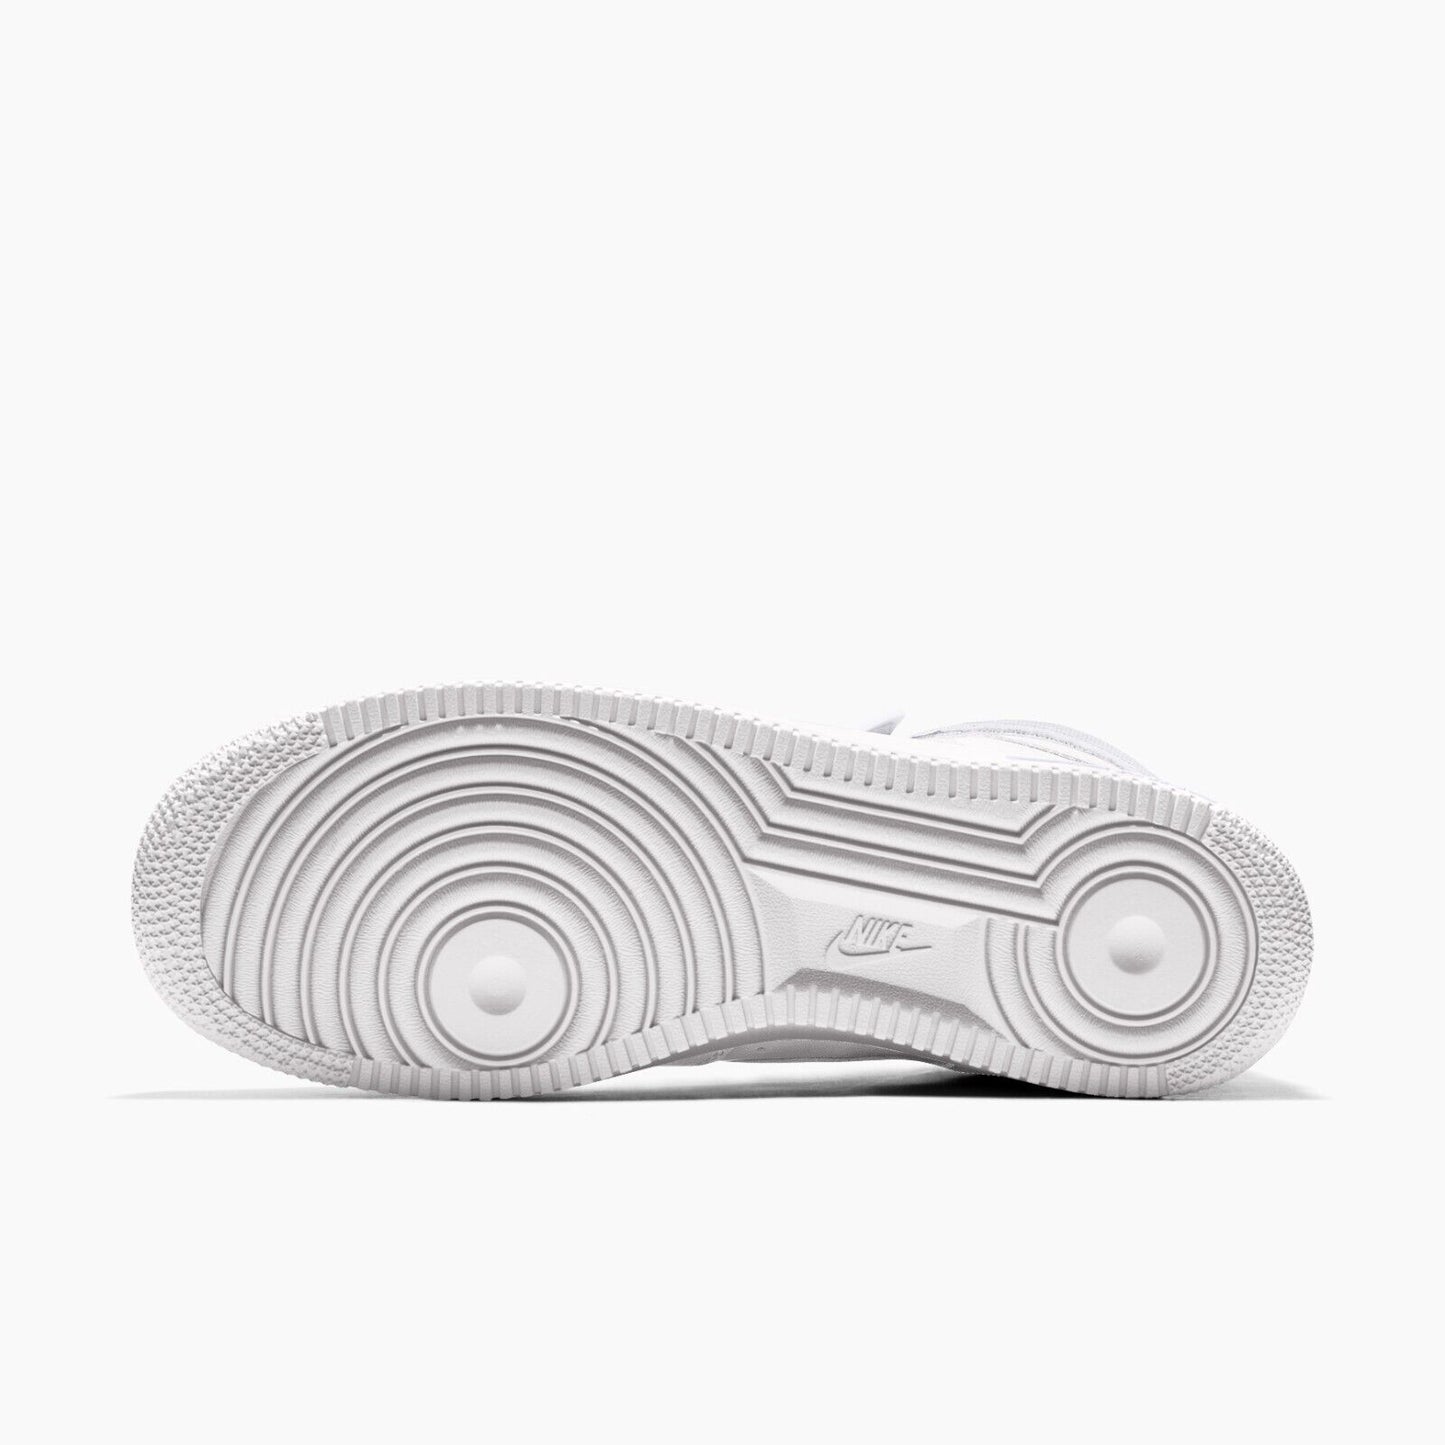 $250 NIB NEW Mens Nike Air Force 1 Premium White Leather Custom High Top Shoes